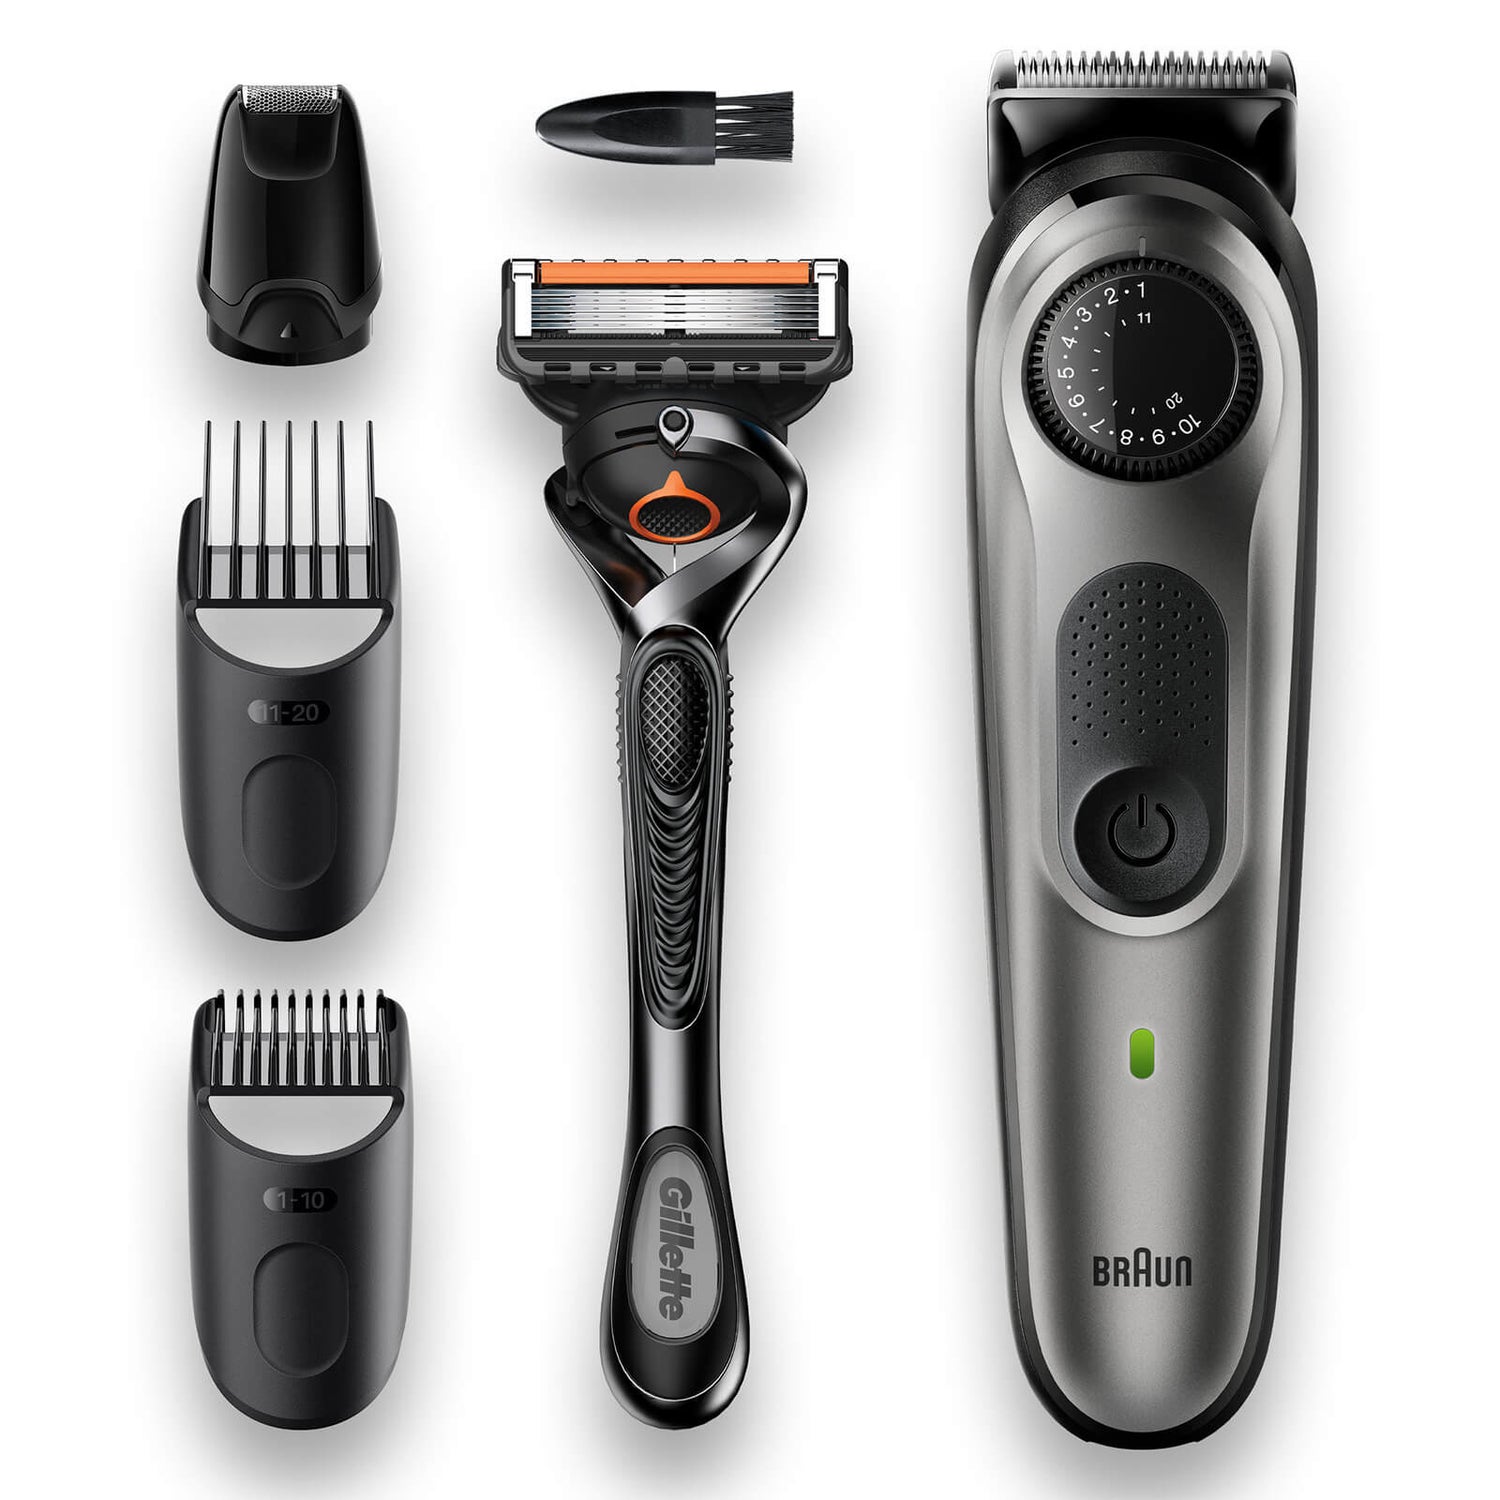 Braun Beard Trimmer 5 with Precision Combs, Mini Foil Shaver and Gillette Razor